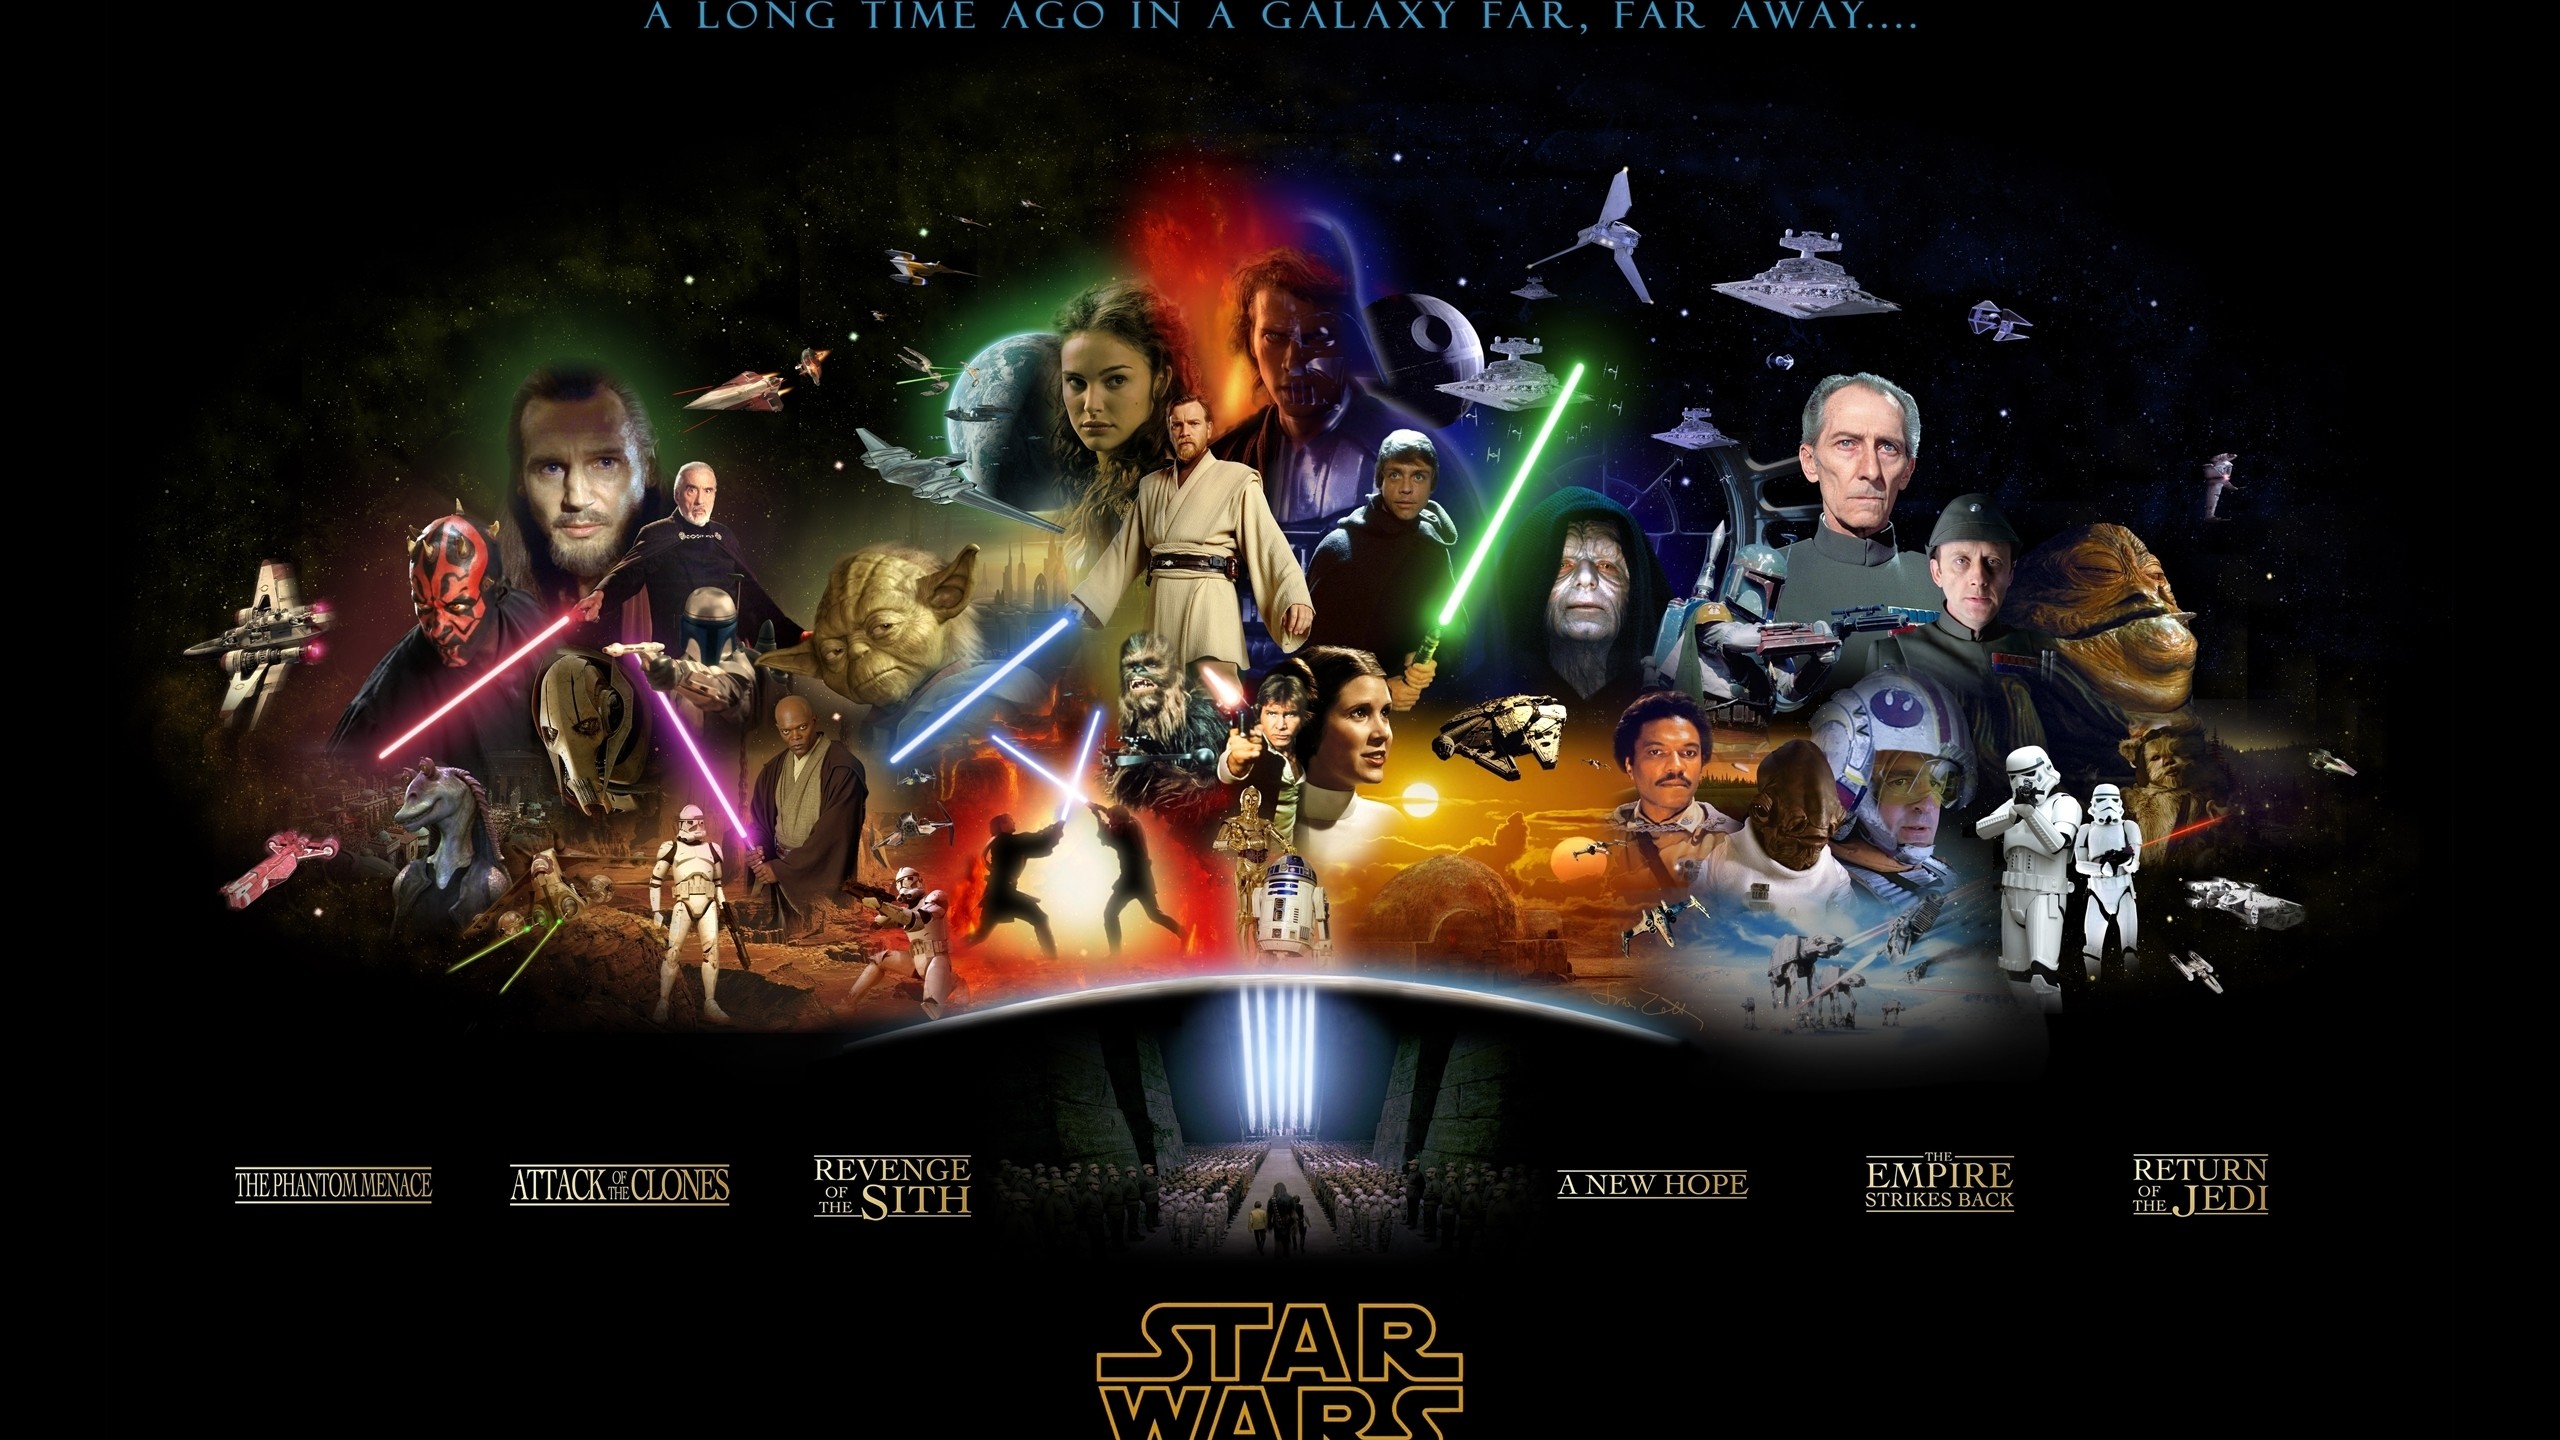 Description Download Star wars movies stormtroopers darth maul darth vader boba fett wallpaper / desktop background in HD Widescreen resolution